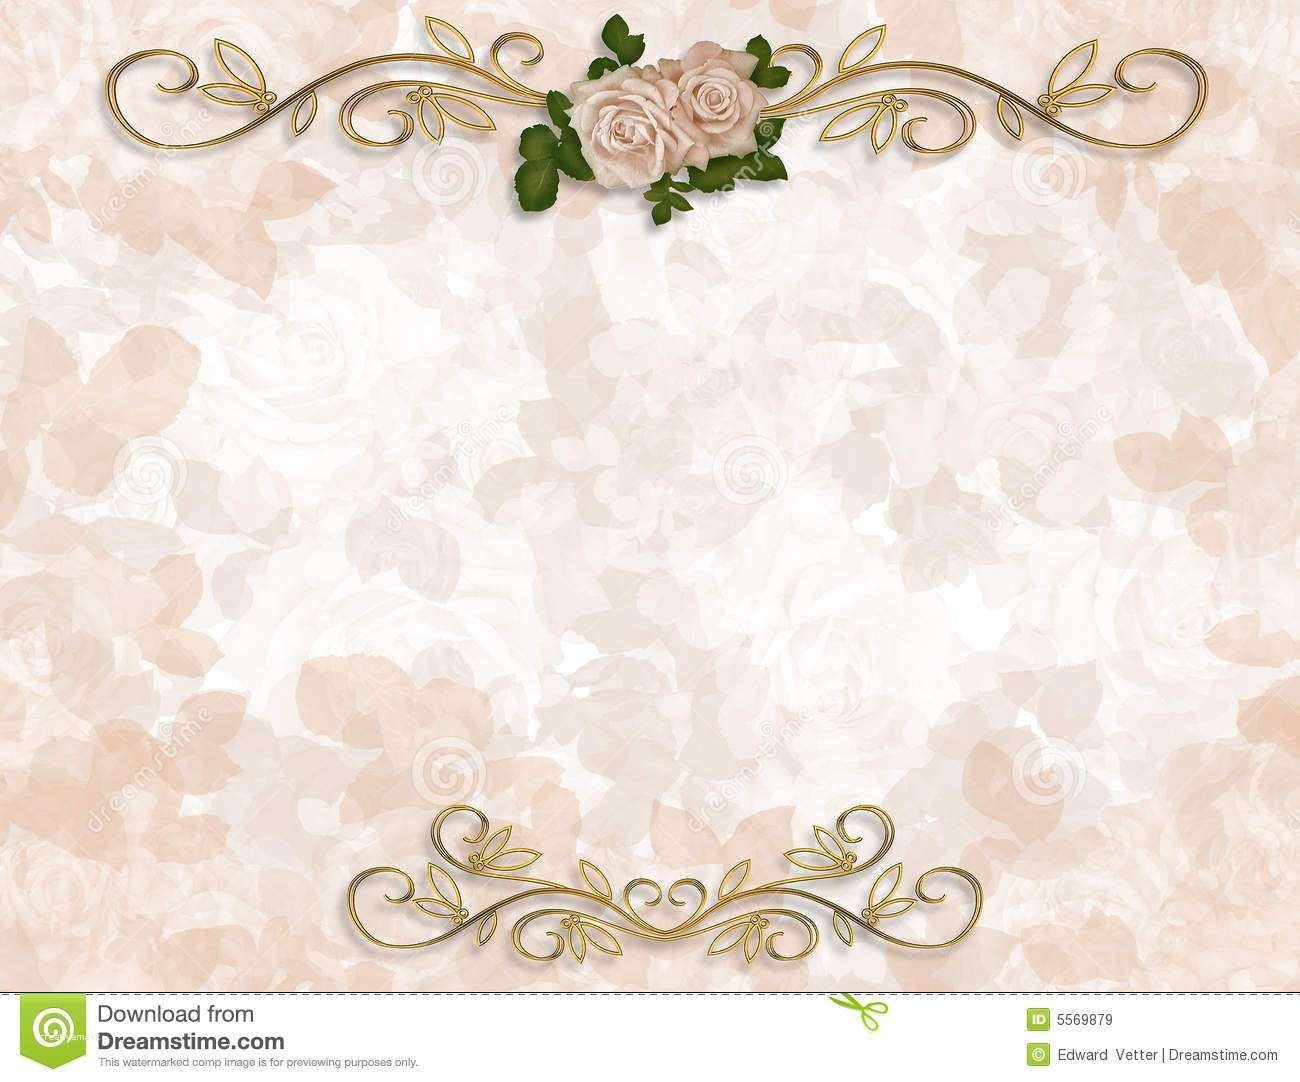 Fresh Wedding Invitation Background Designs Free Download